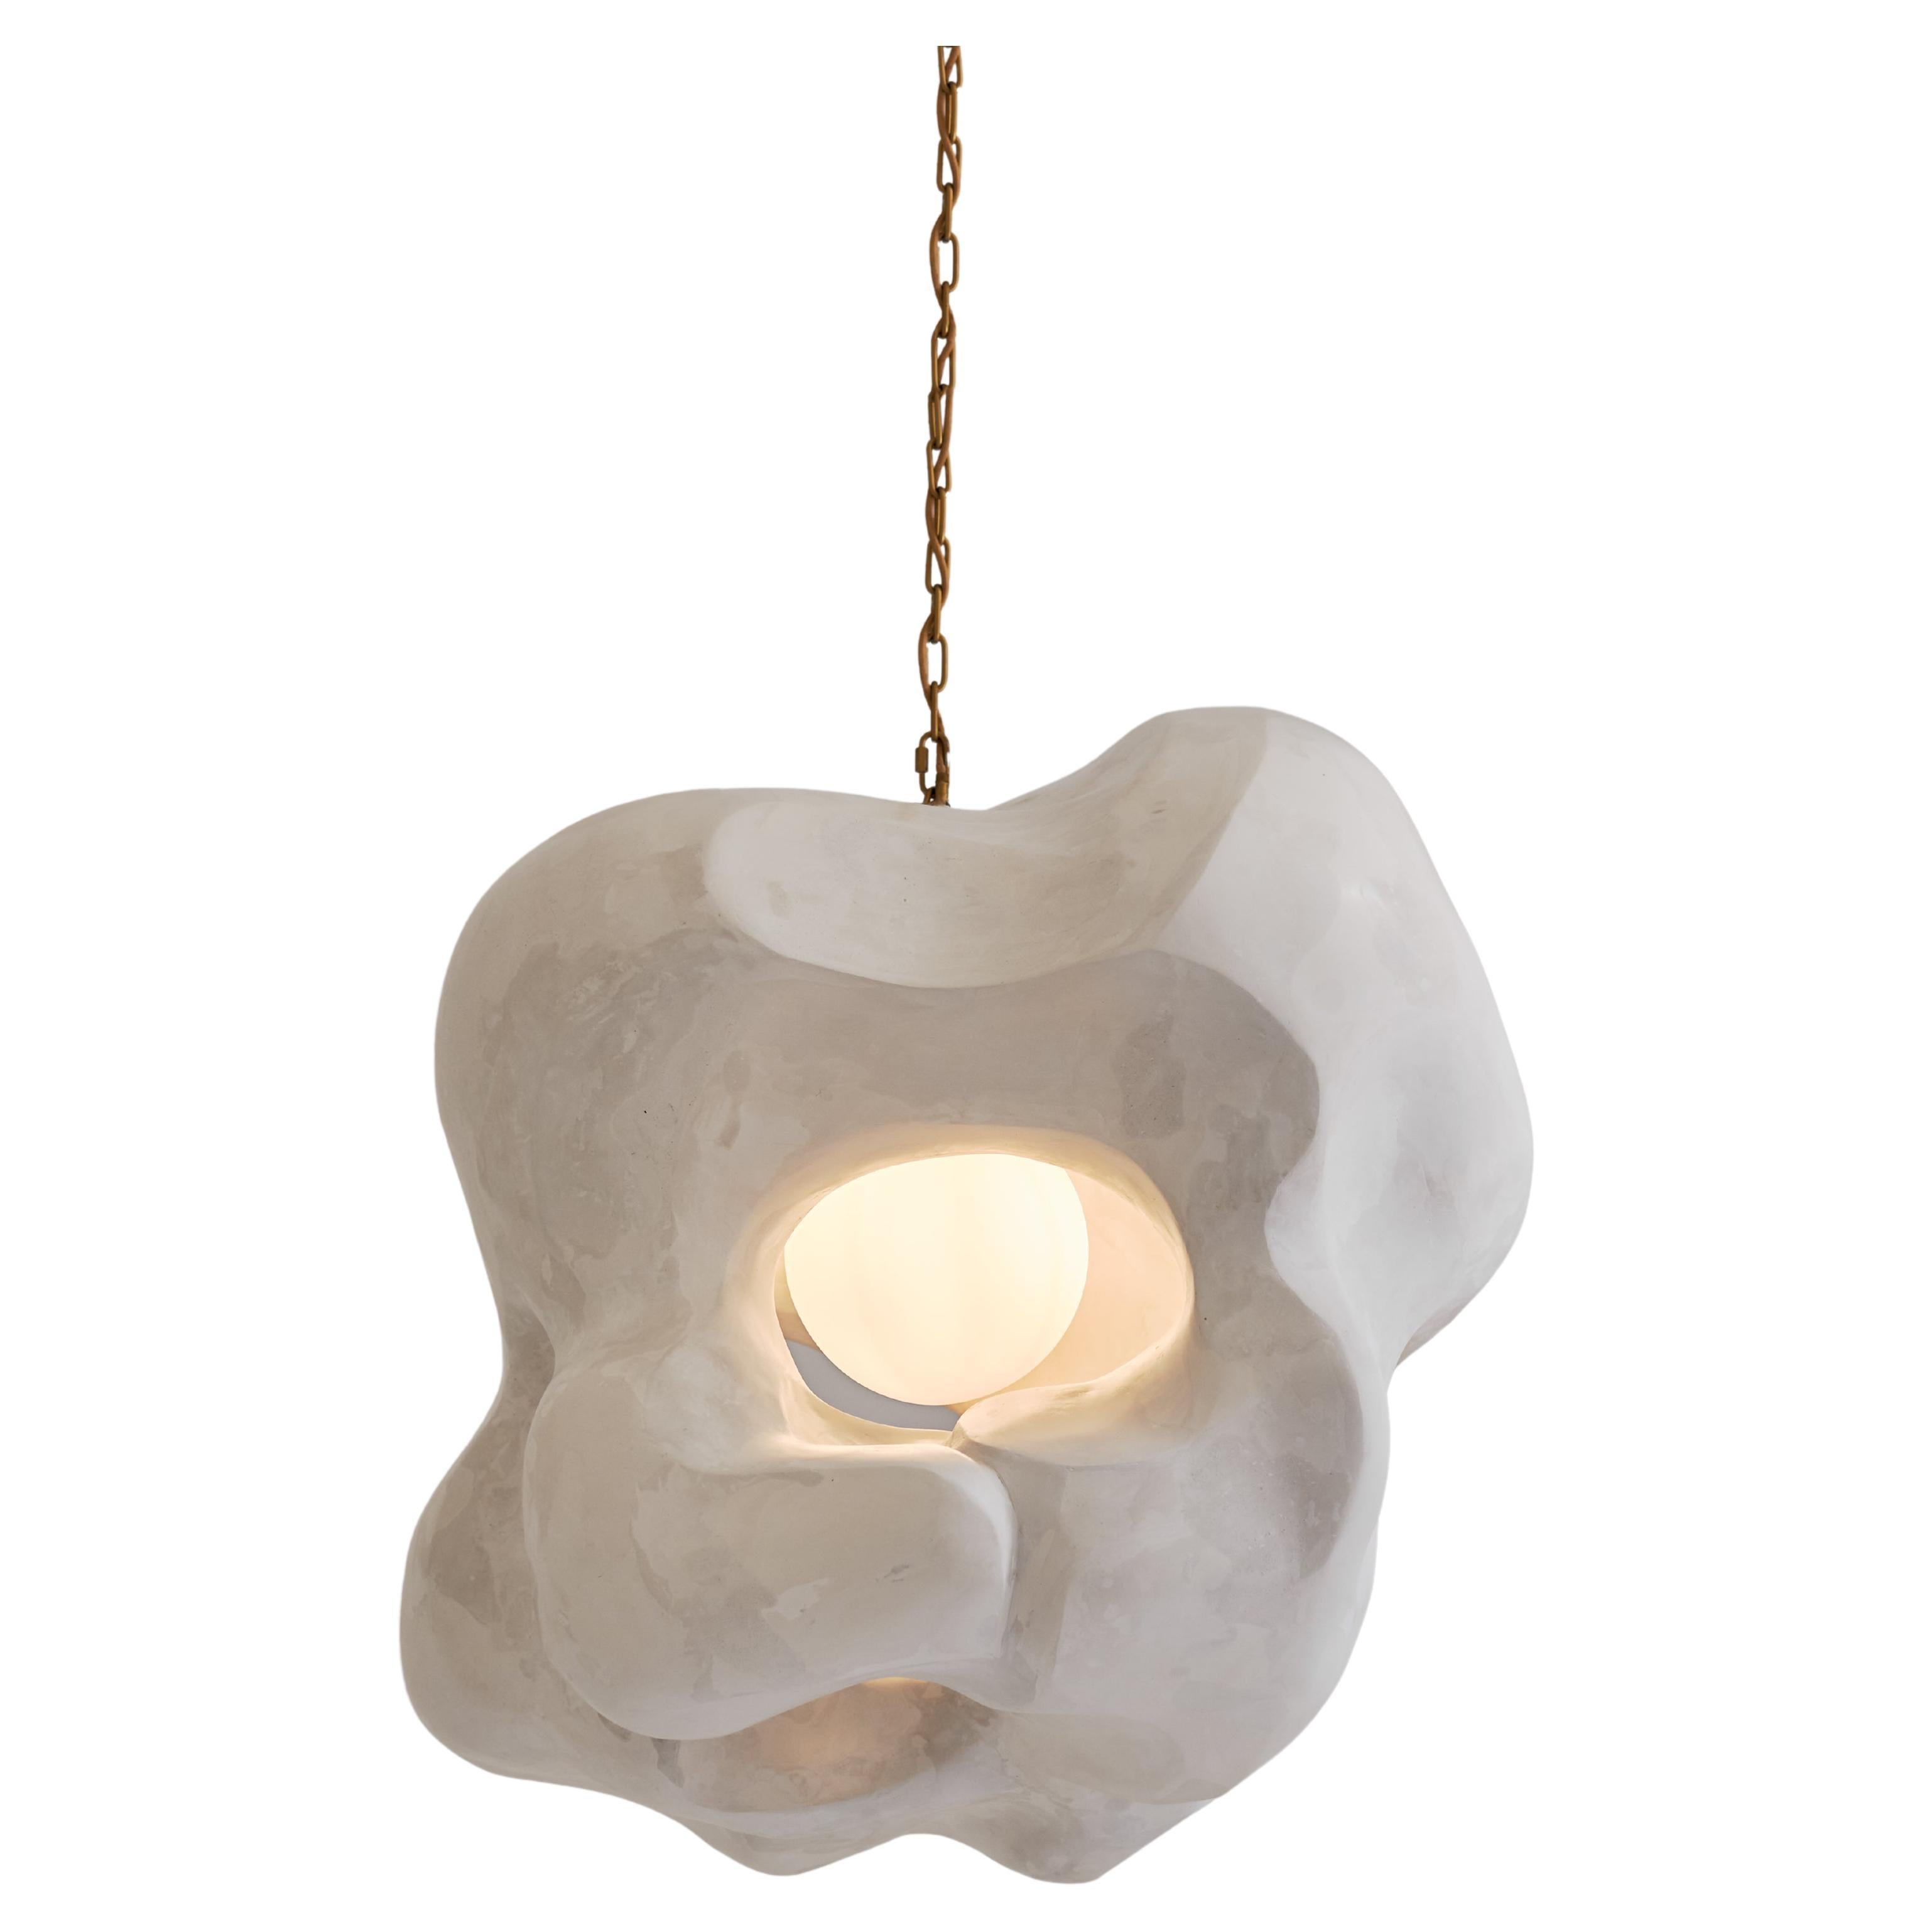 Grande lampe à suspension contemporaine, design de collection sculpturalIkigai par AOAO